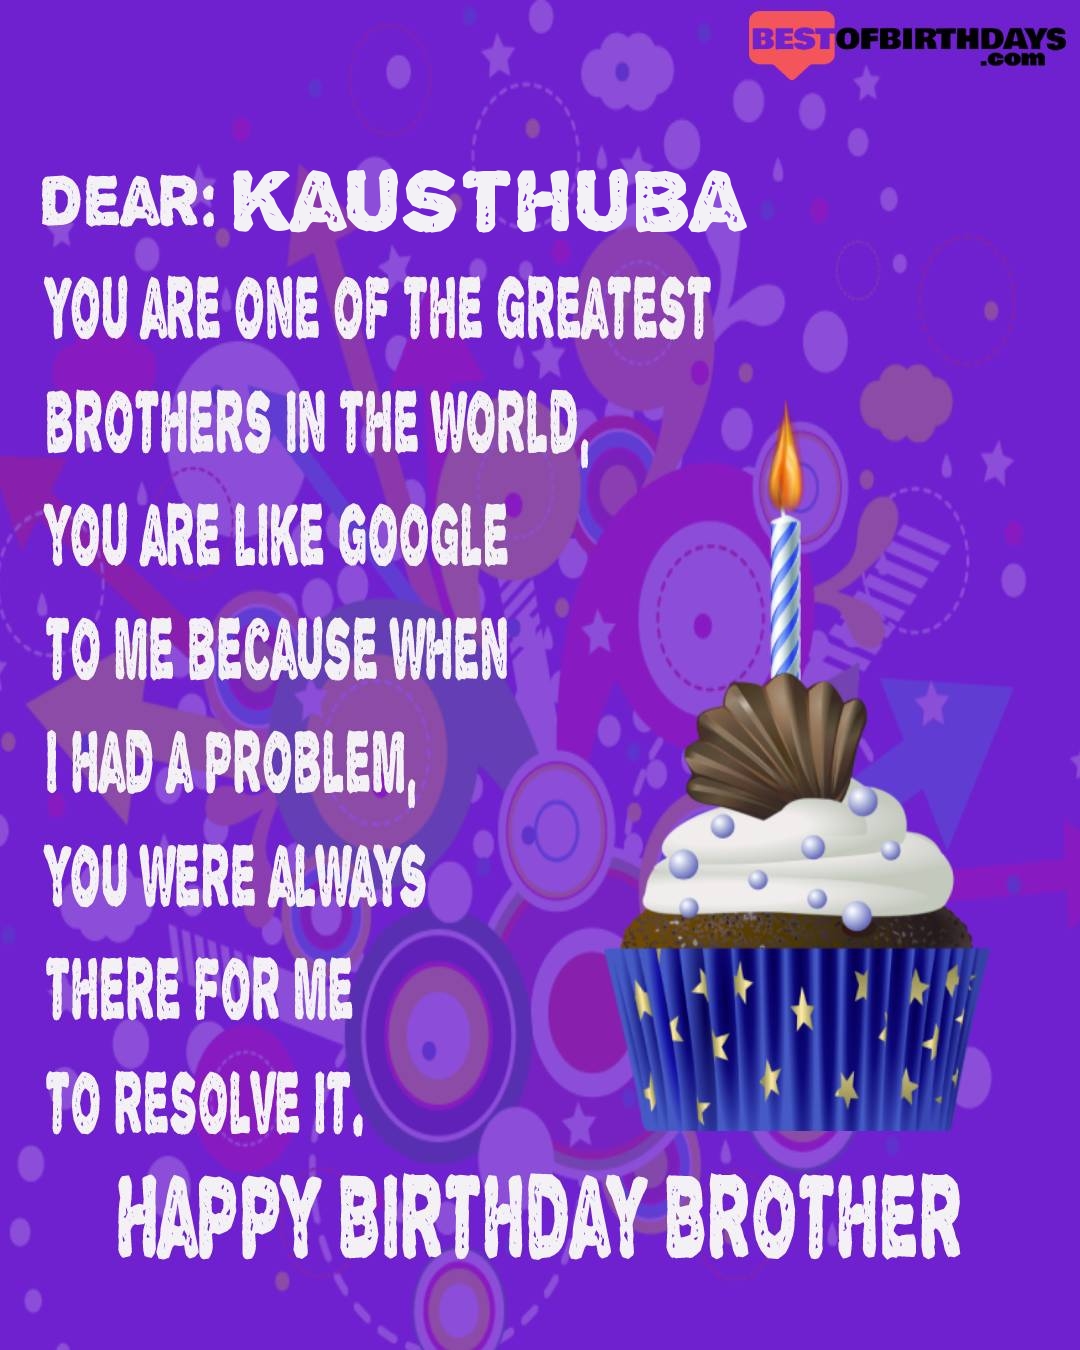 Happy birthday kausthuba bhai brother bro